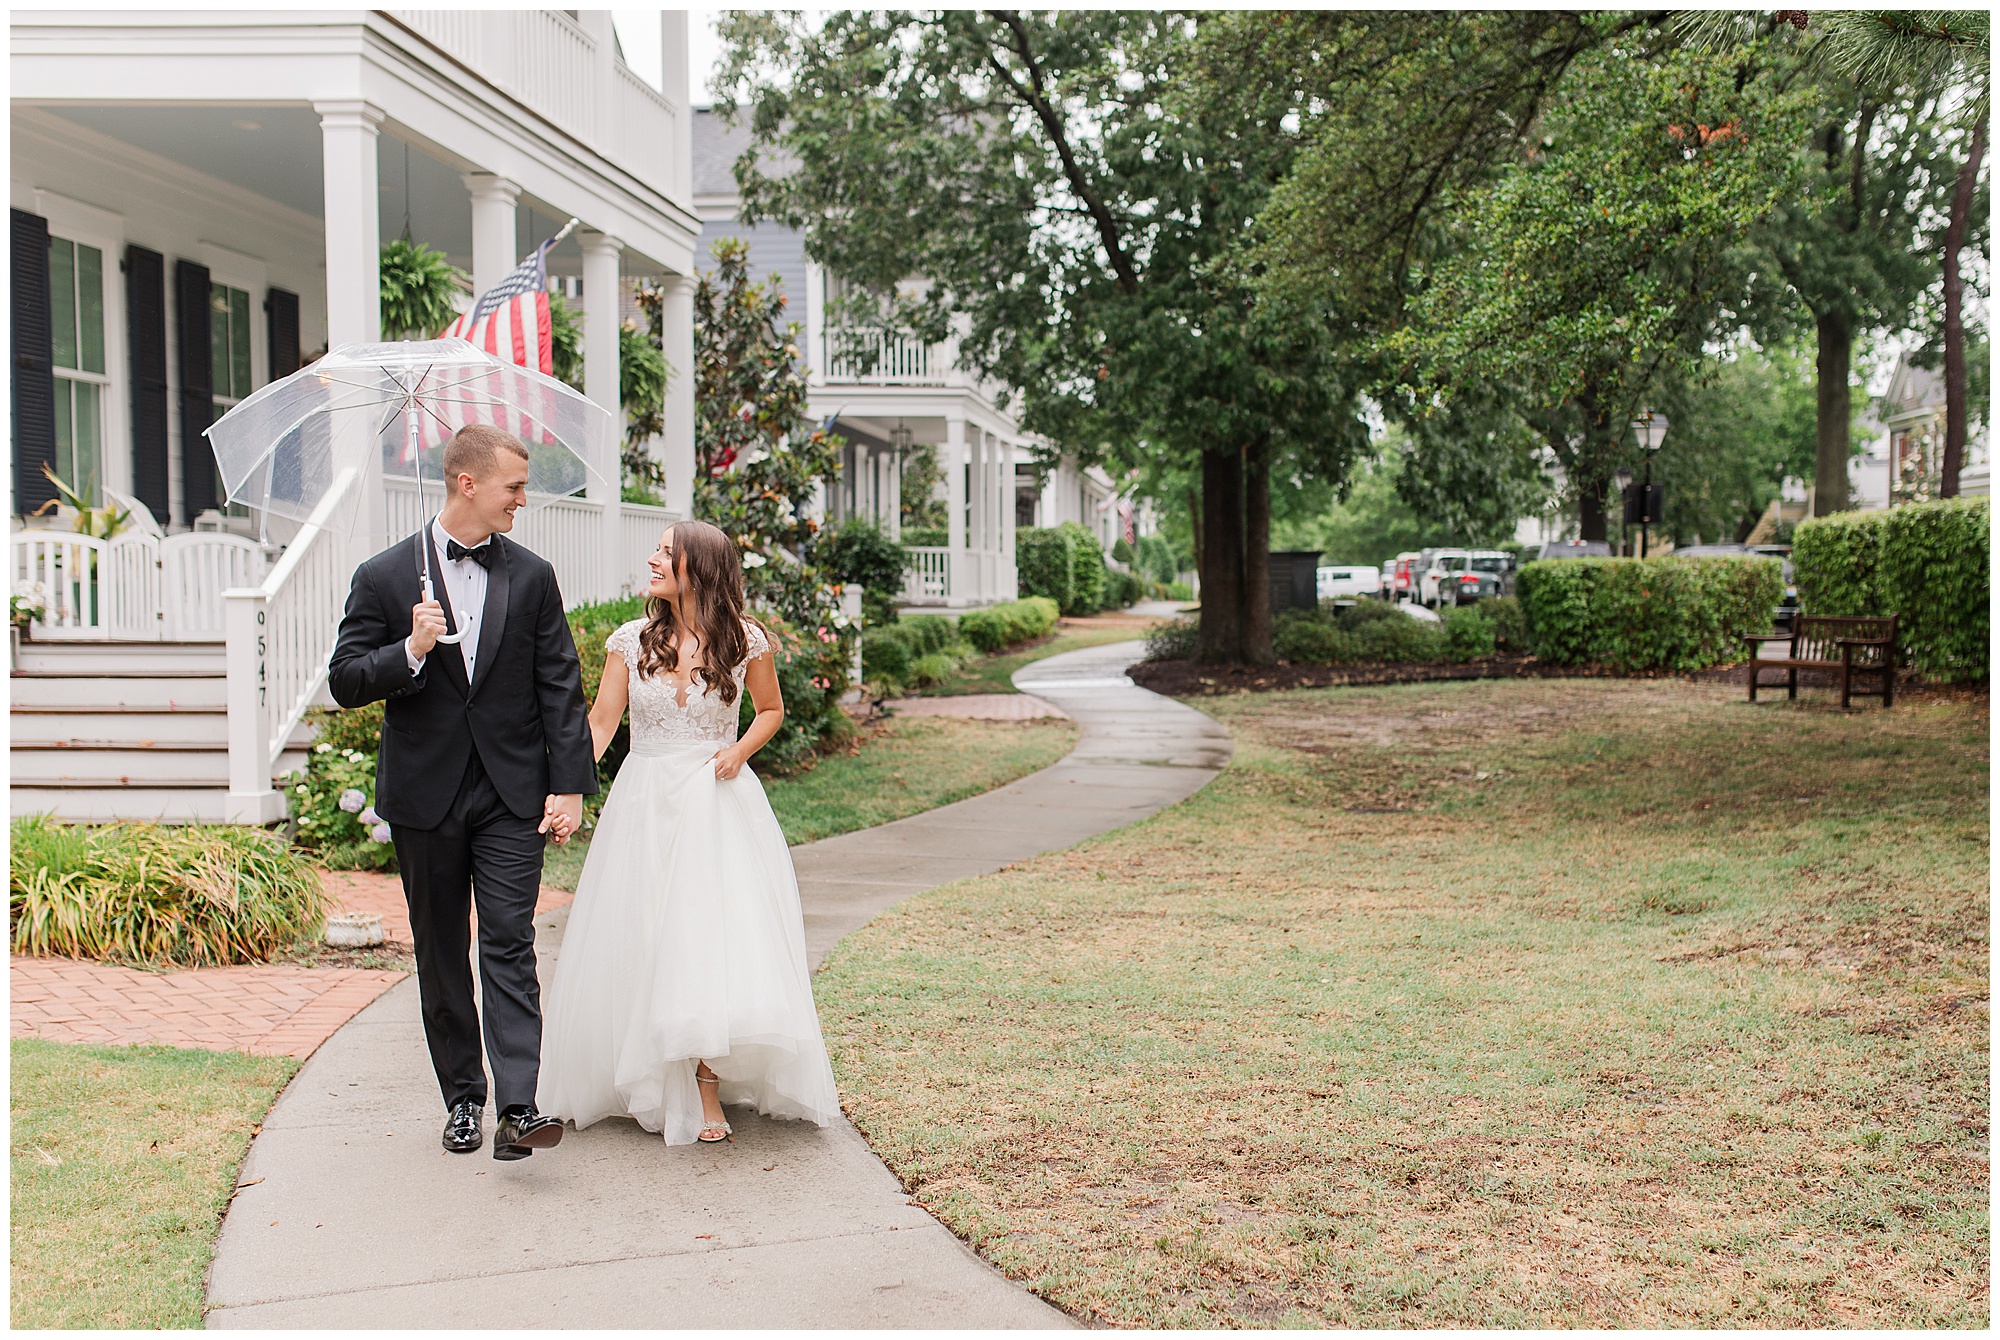 Danielle & Chris, East Beach wedding, Hampton Roads weddings, Kelley Stinson Photography, rainy wedding day